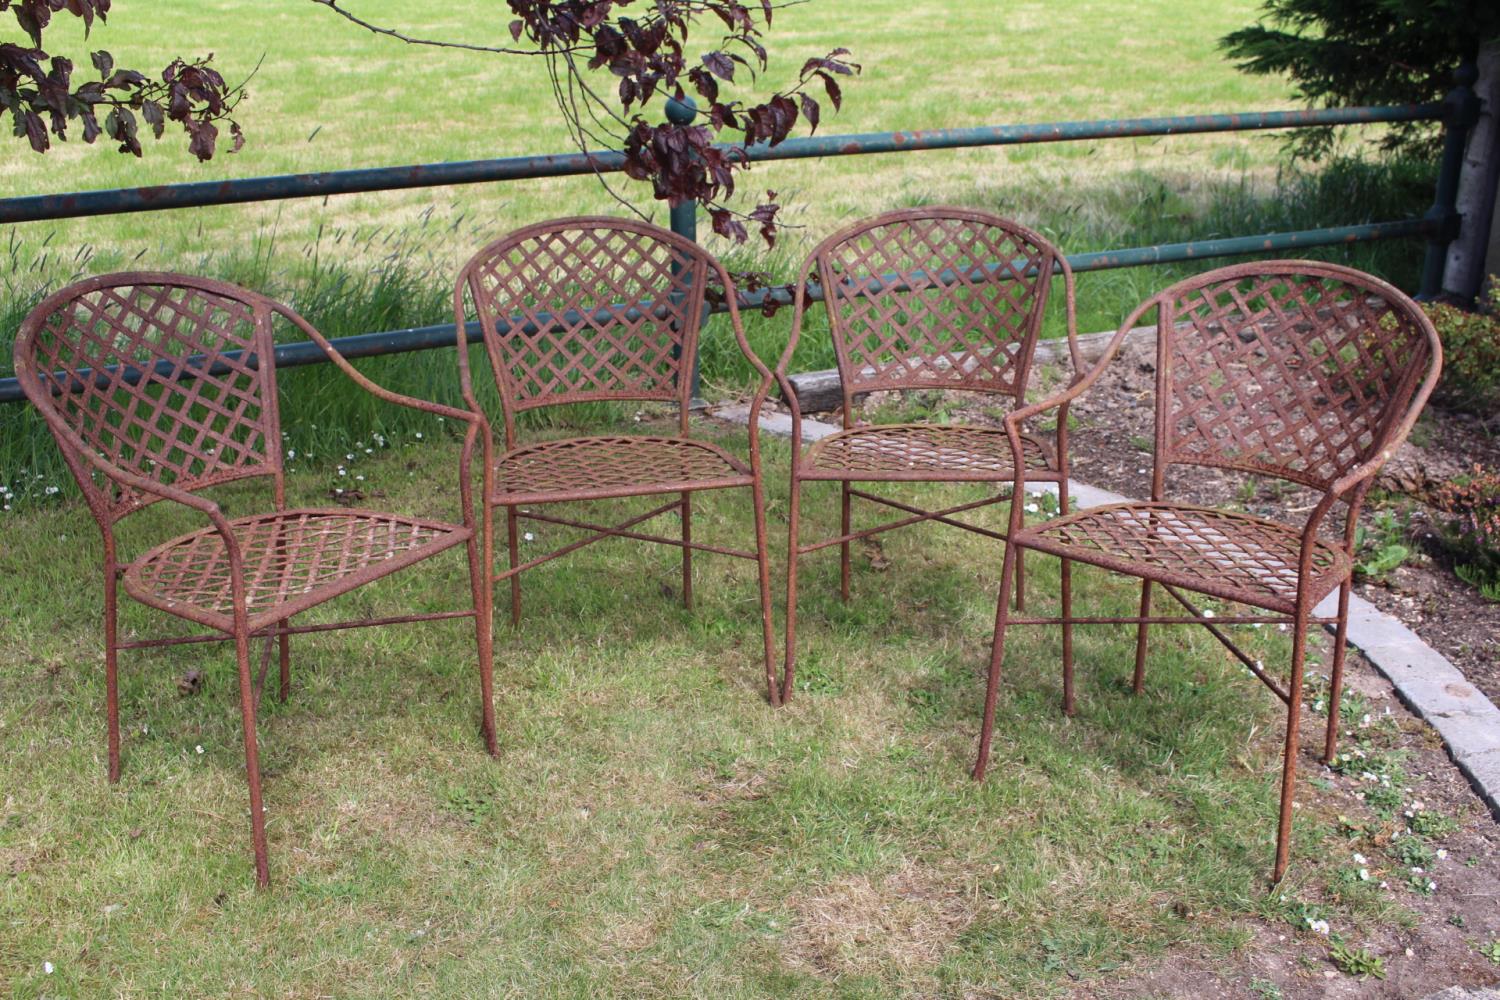 Set of four wrought iron garden chairs.